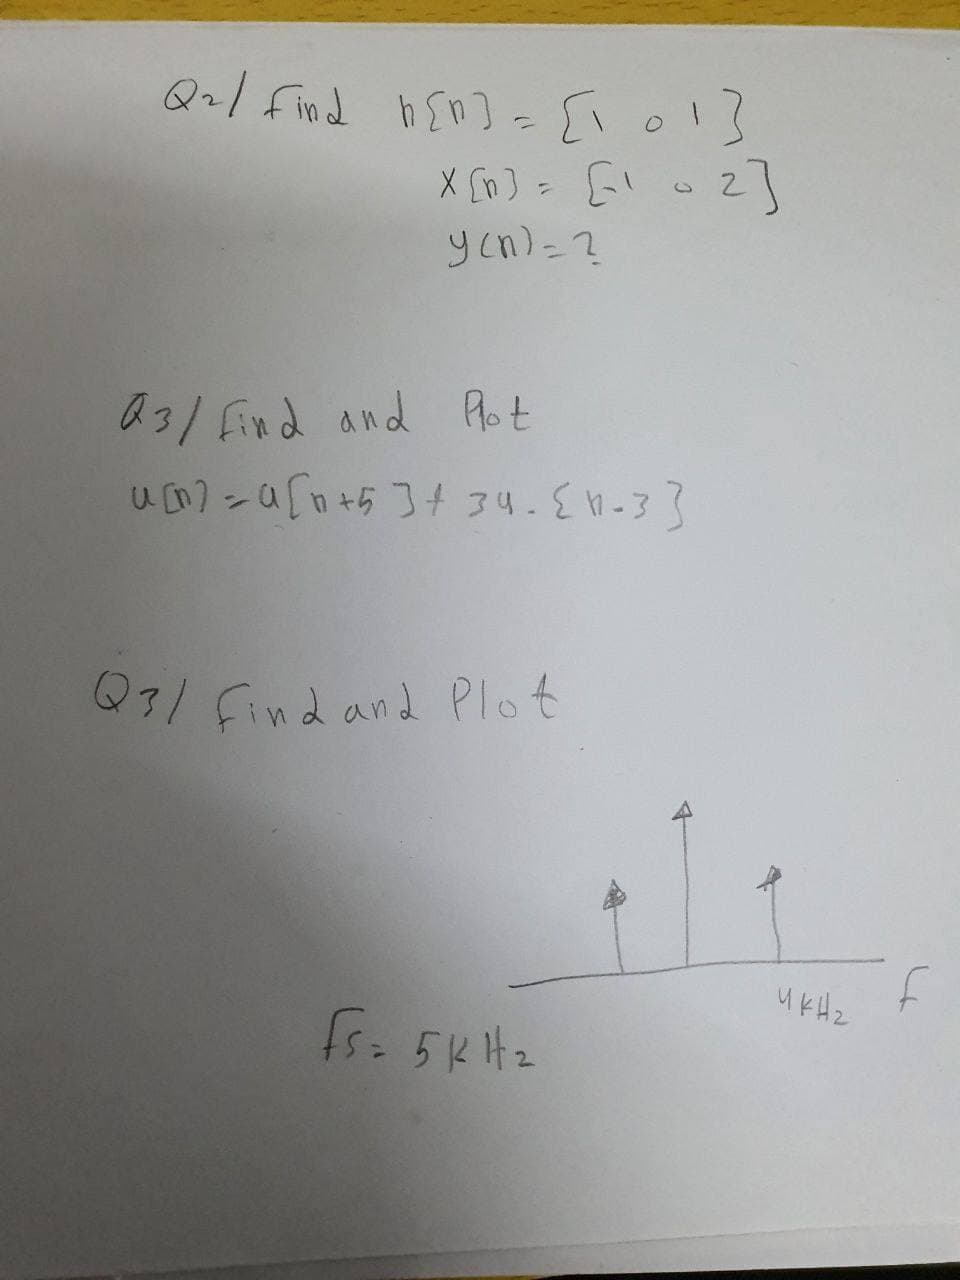 Q2/ find h En] - [l o!}
X [n]
ycn)=?
A3/find and Plot
Q3/find and Plot
u kHz
